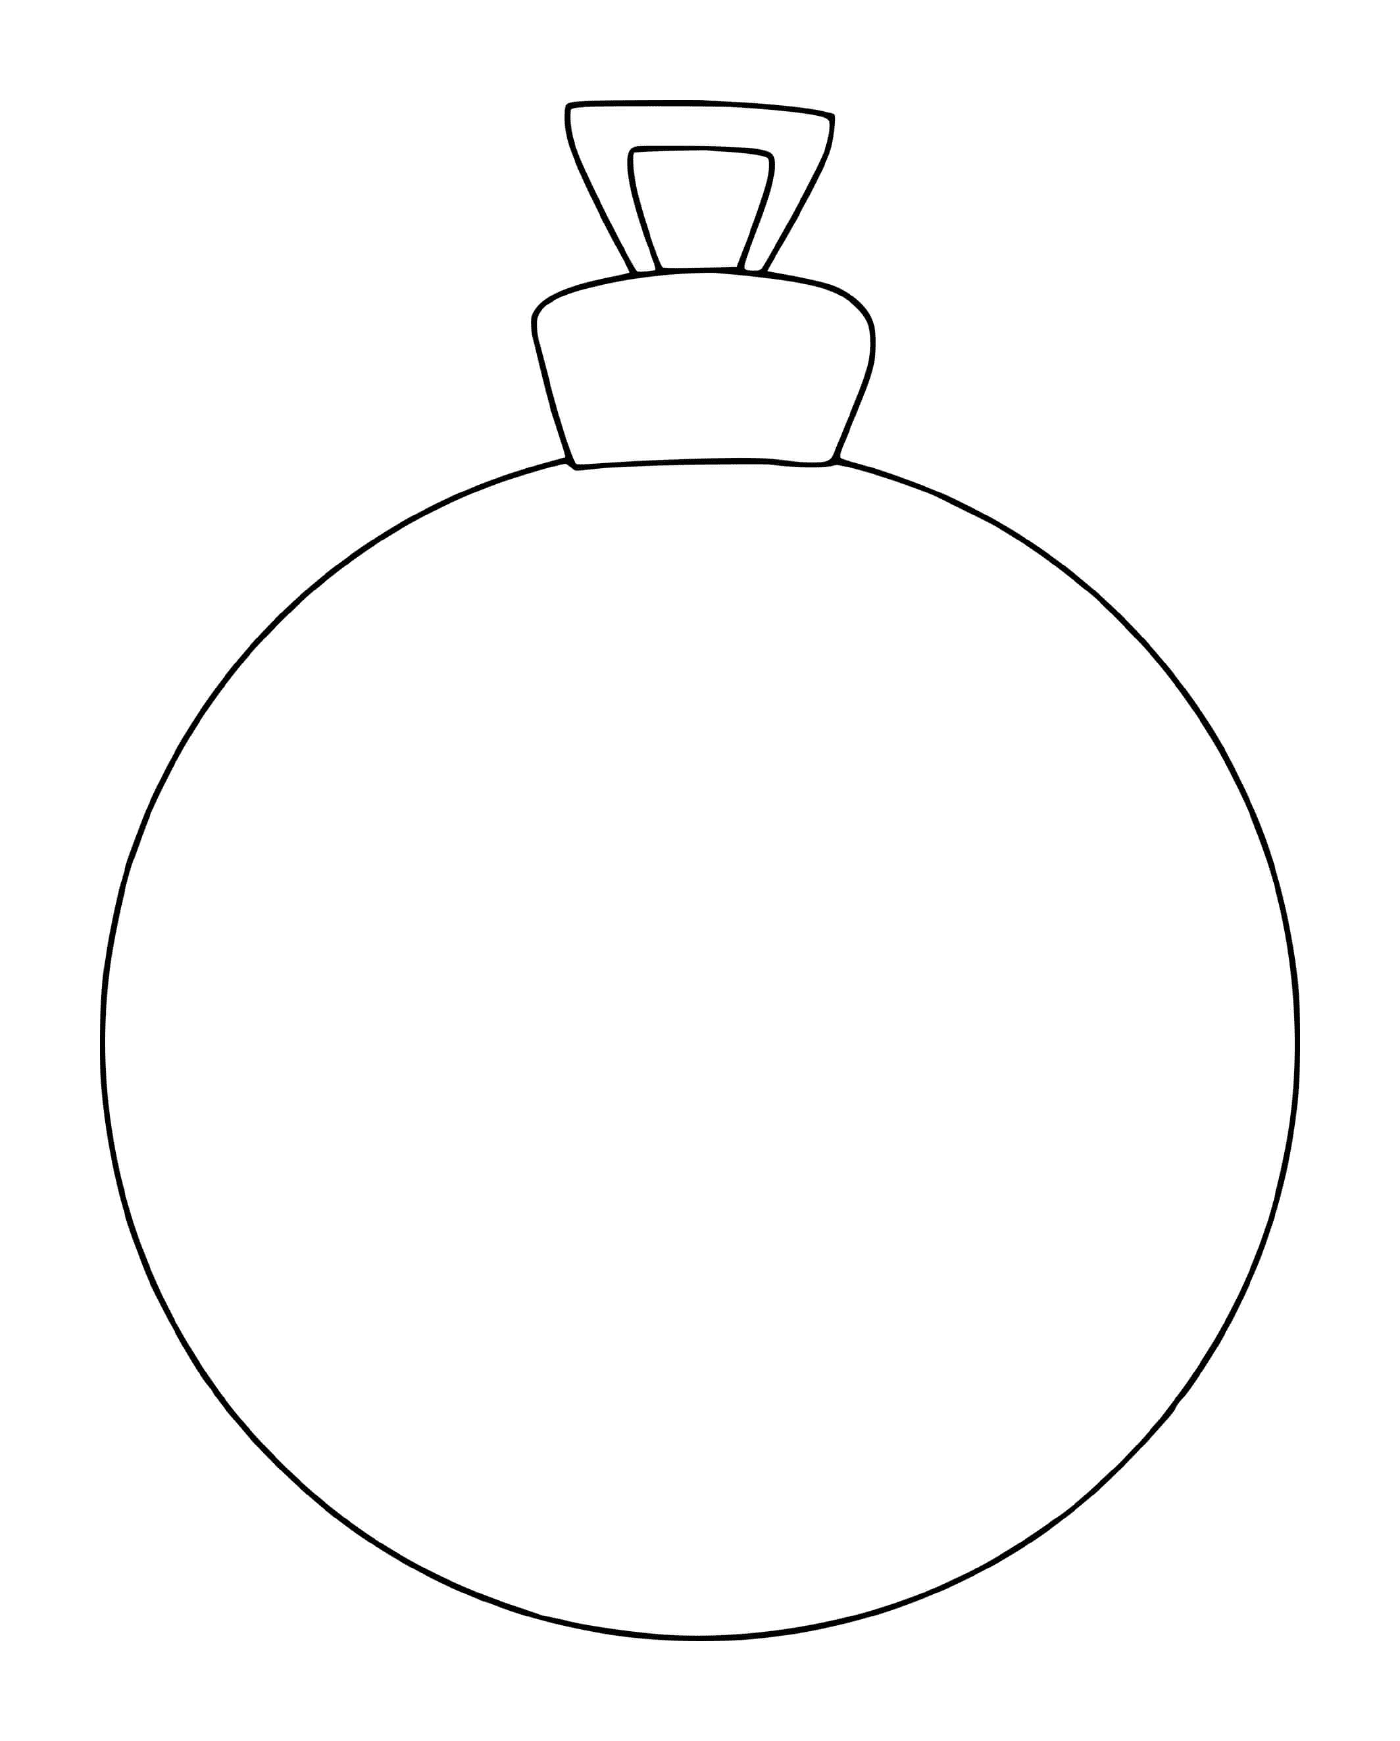  A simple and easy Christmas ball for black fir 